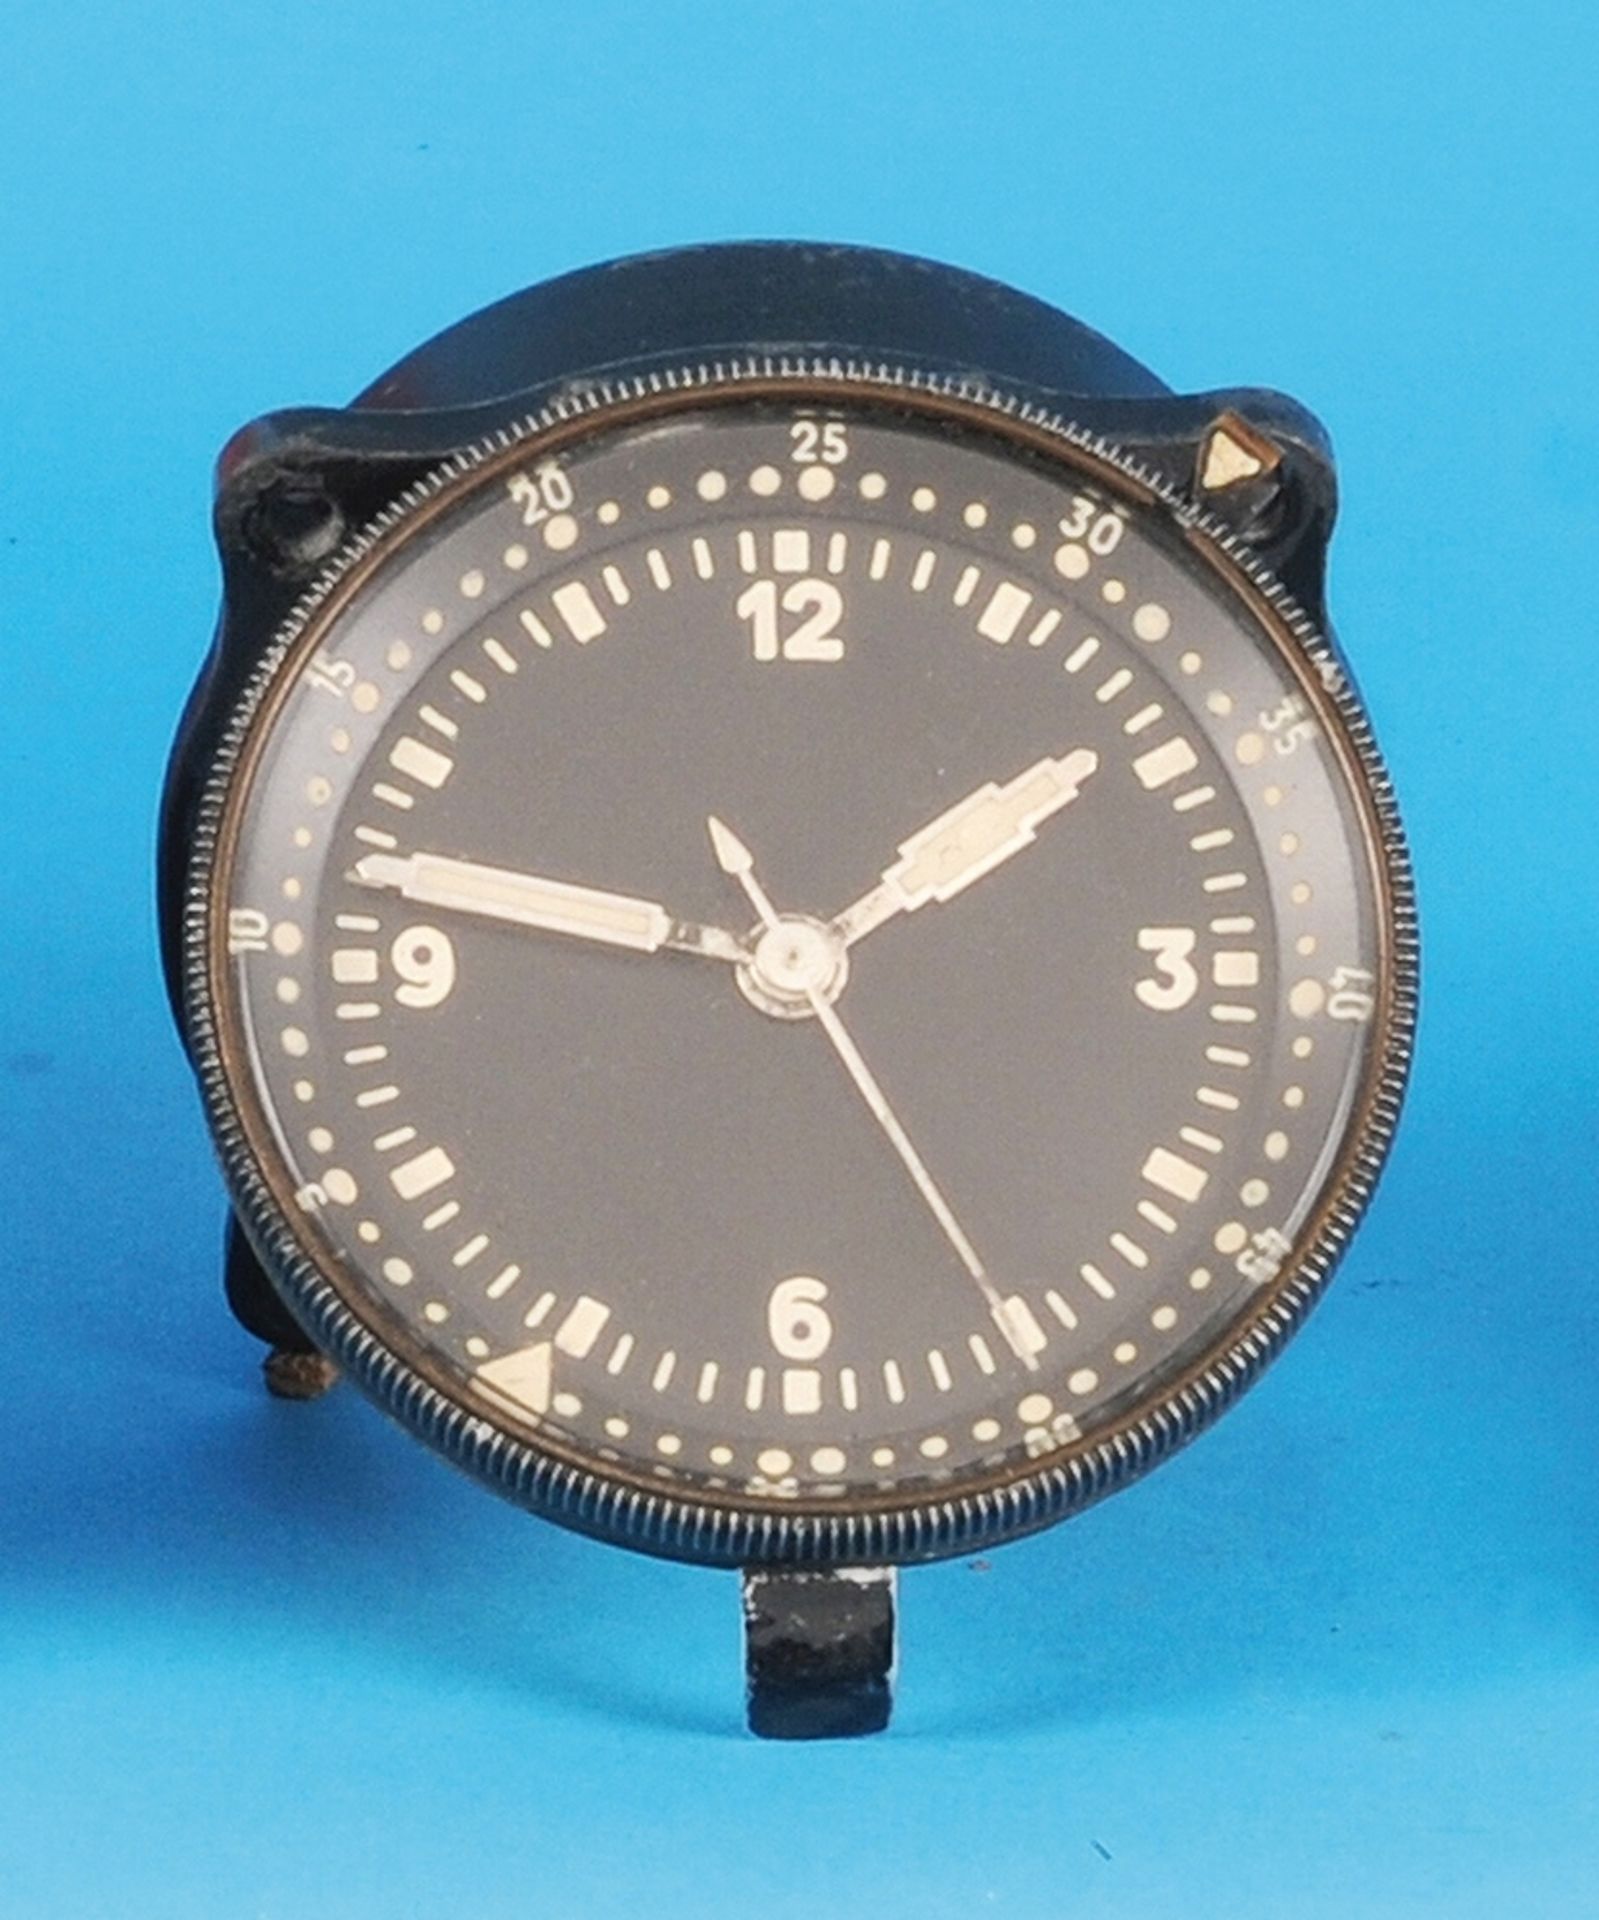 Blind Flight Watch with Central Seconds, Bo. UK 3, type Schlenker-Grusen, 